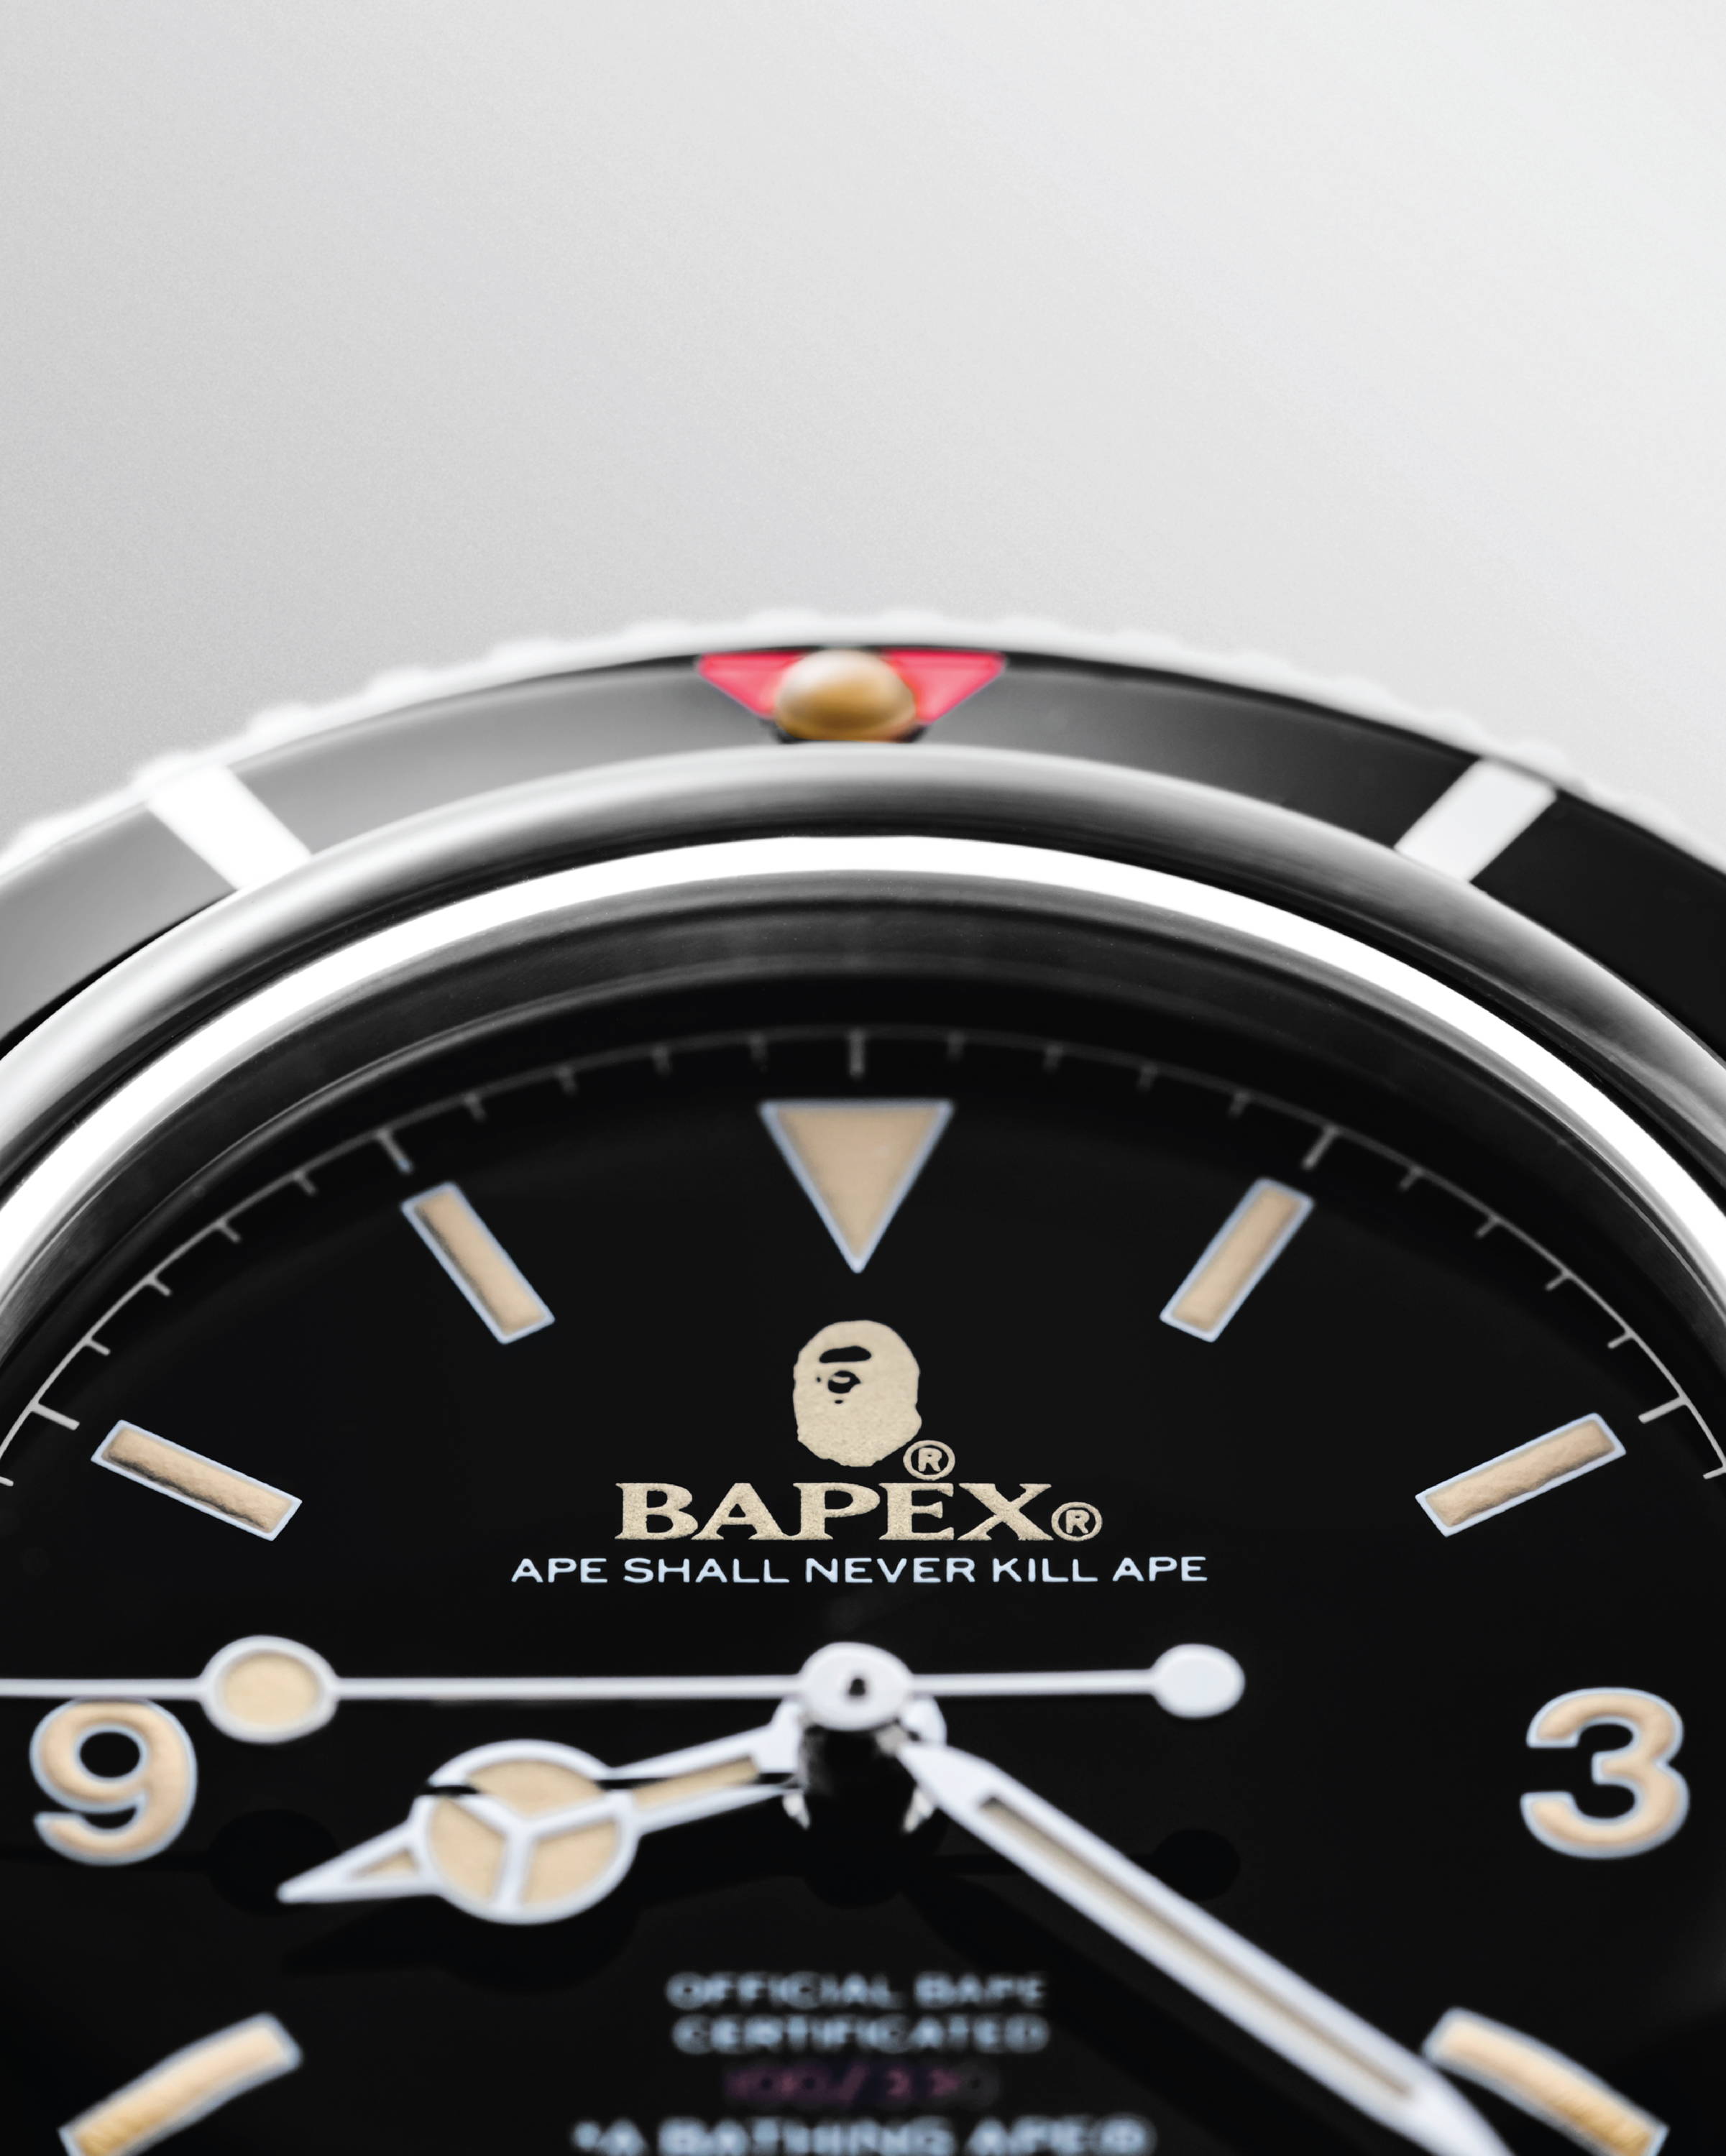 CLASSIC TYPE 1 BAPEX® COLLECTION | bape.com